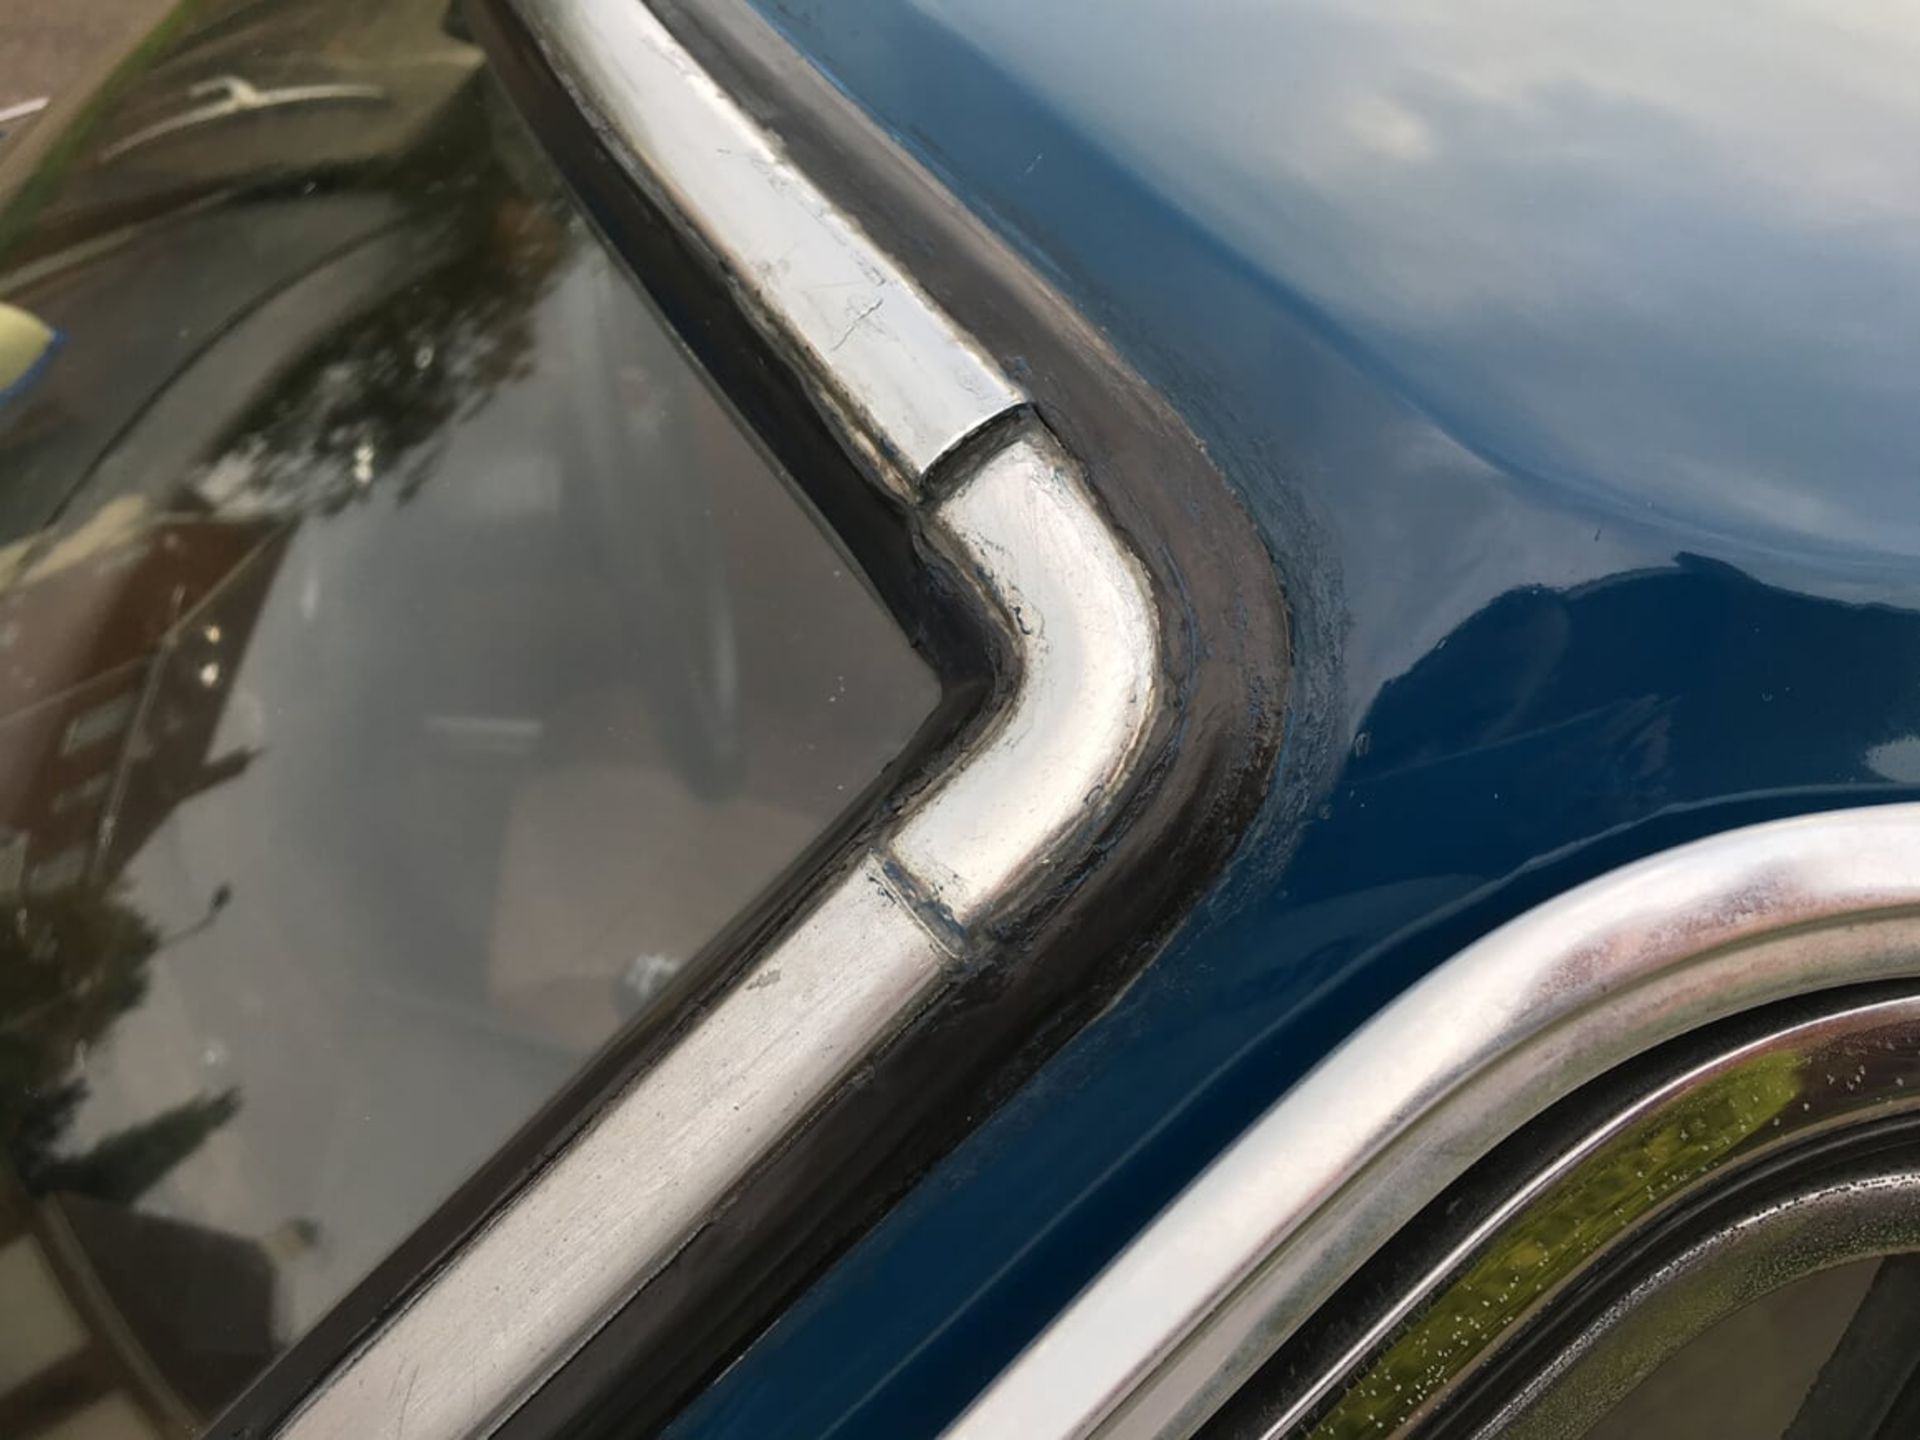 1971 MGB GT Chrome Bumper Teal Blue Overdrive - Image 29 of 30